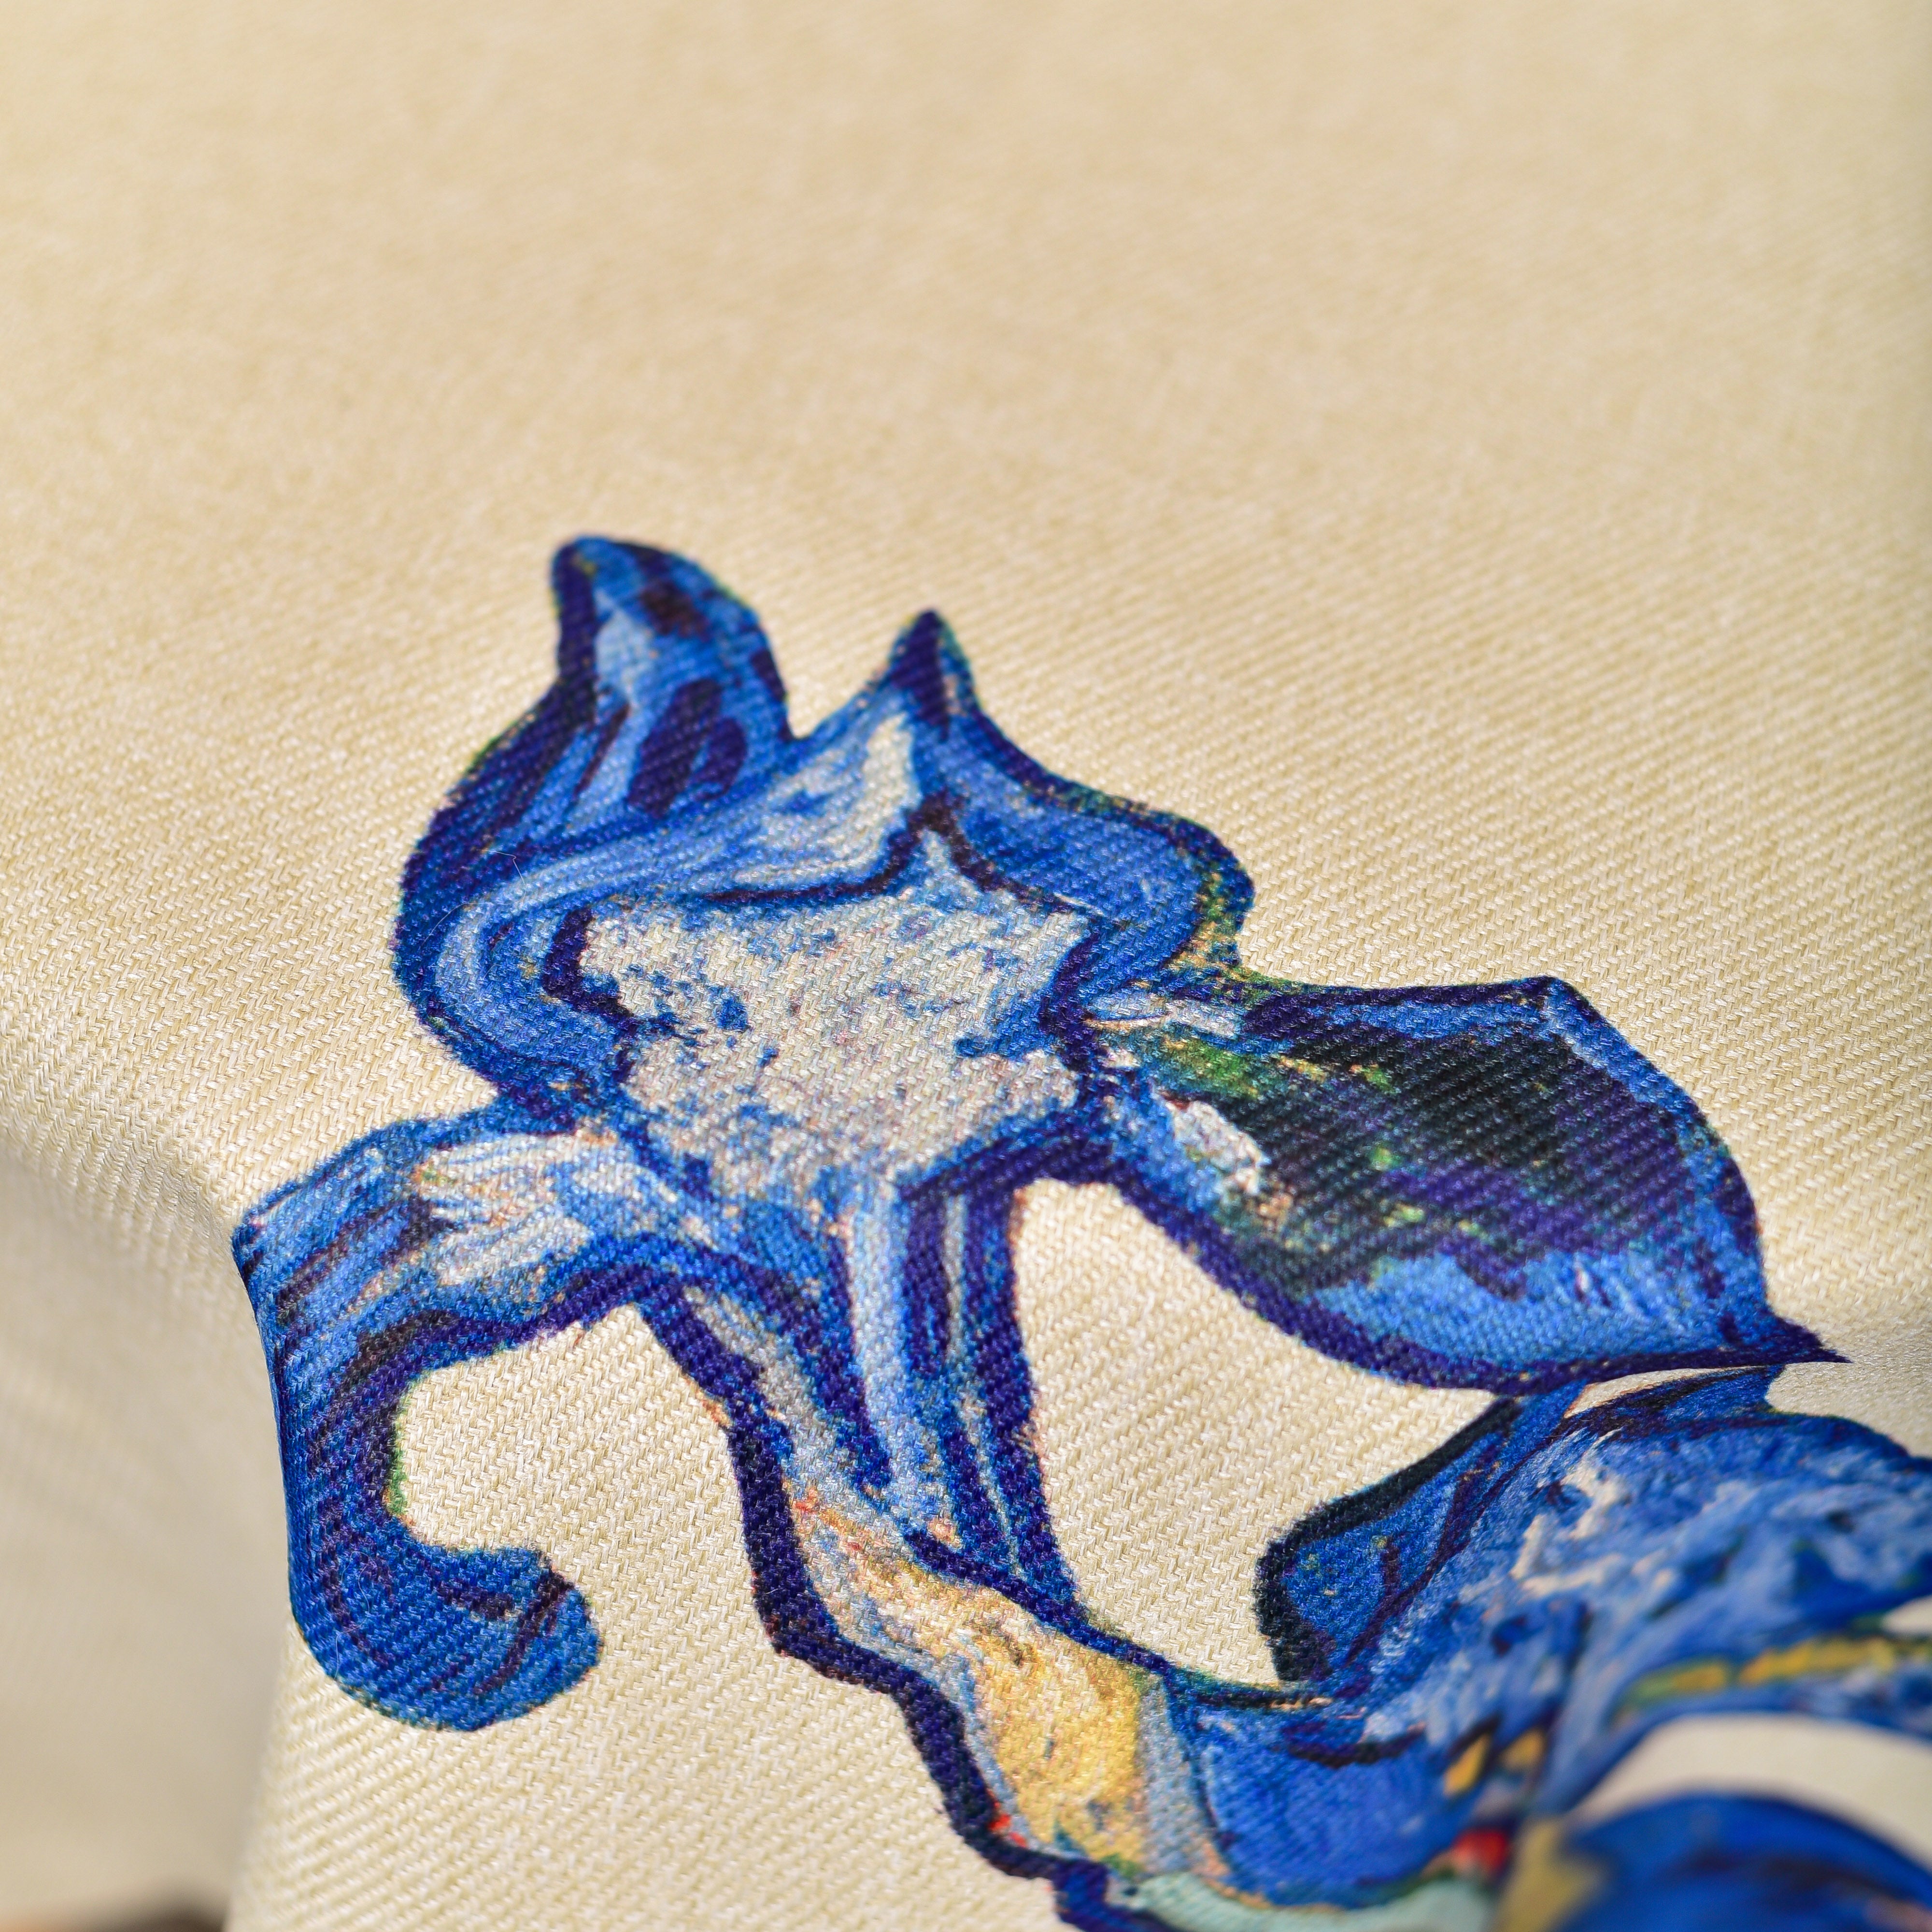 Staltiesė iš perdirbto audinio Vincent van Gogh "Irises Pattern"